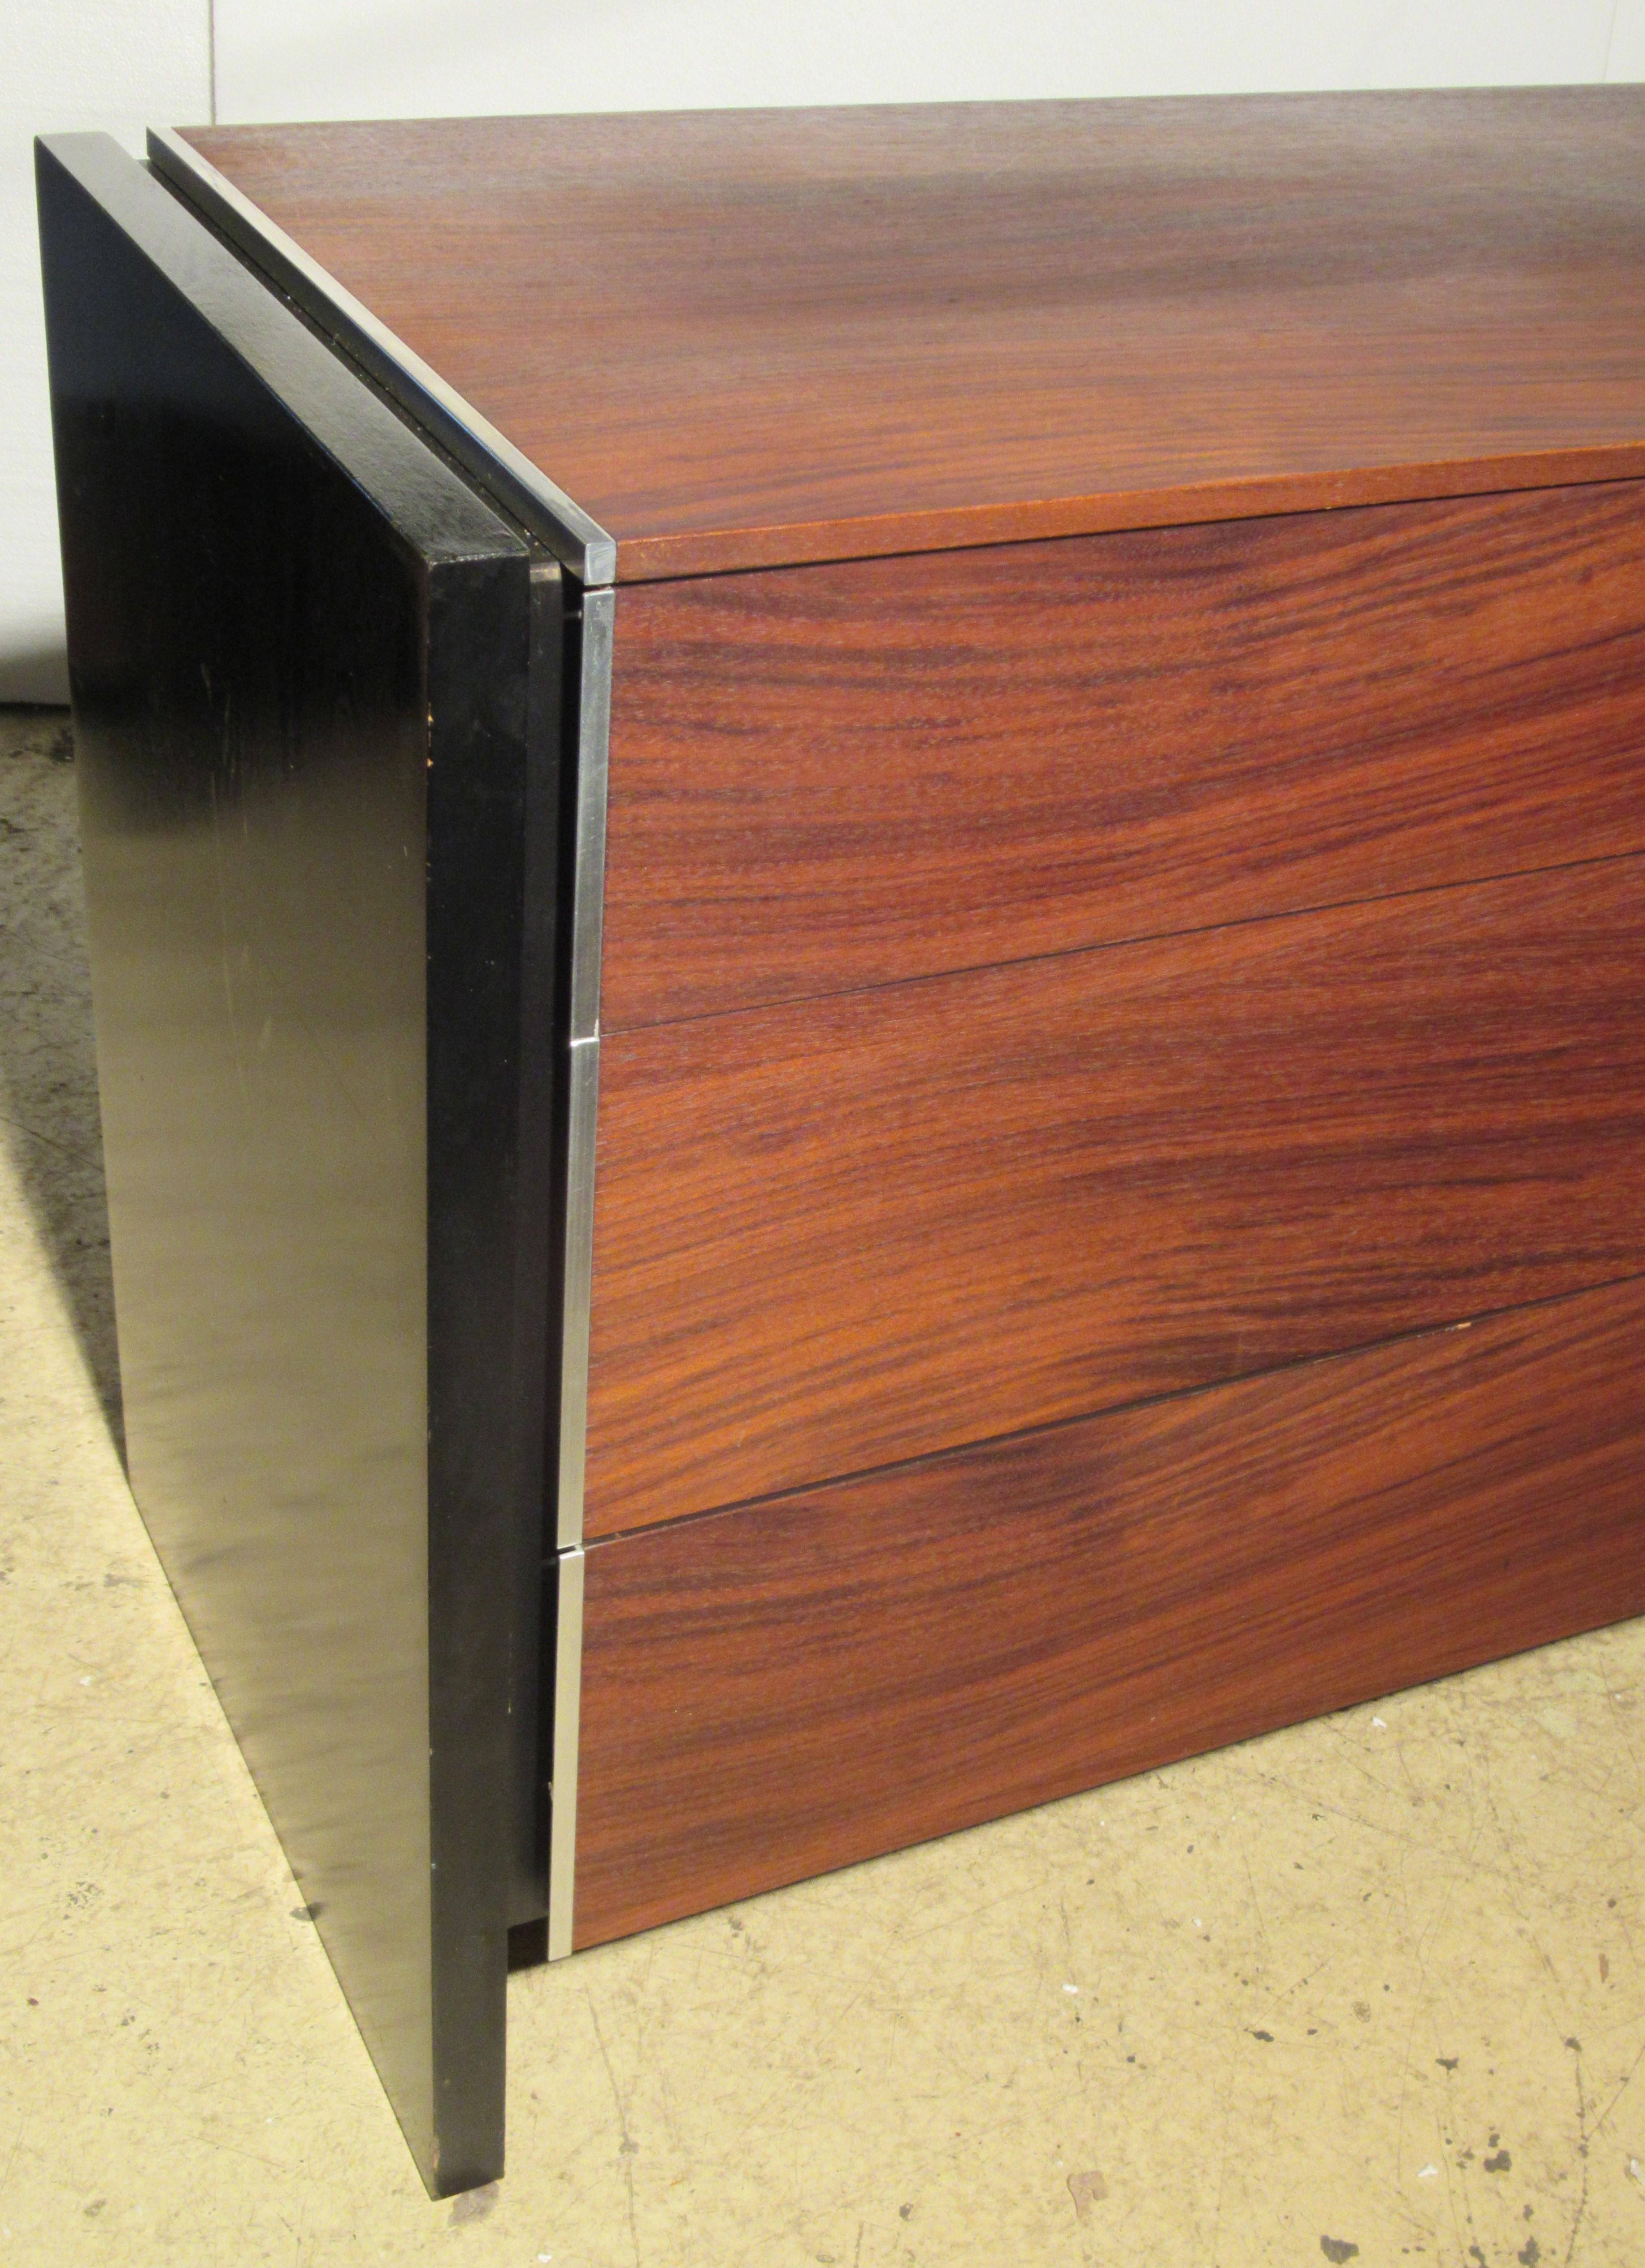 Aluminum Sleek  Rosewood Dresser Credenza by Glenn of California